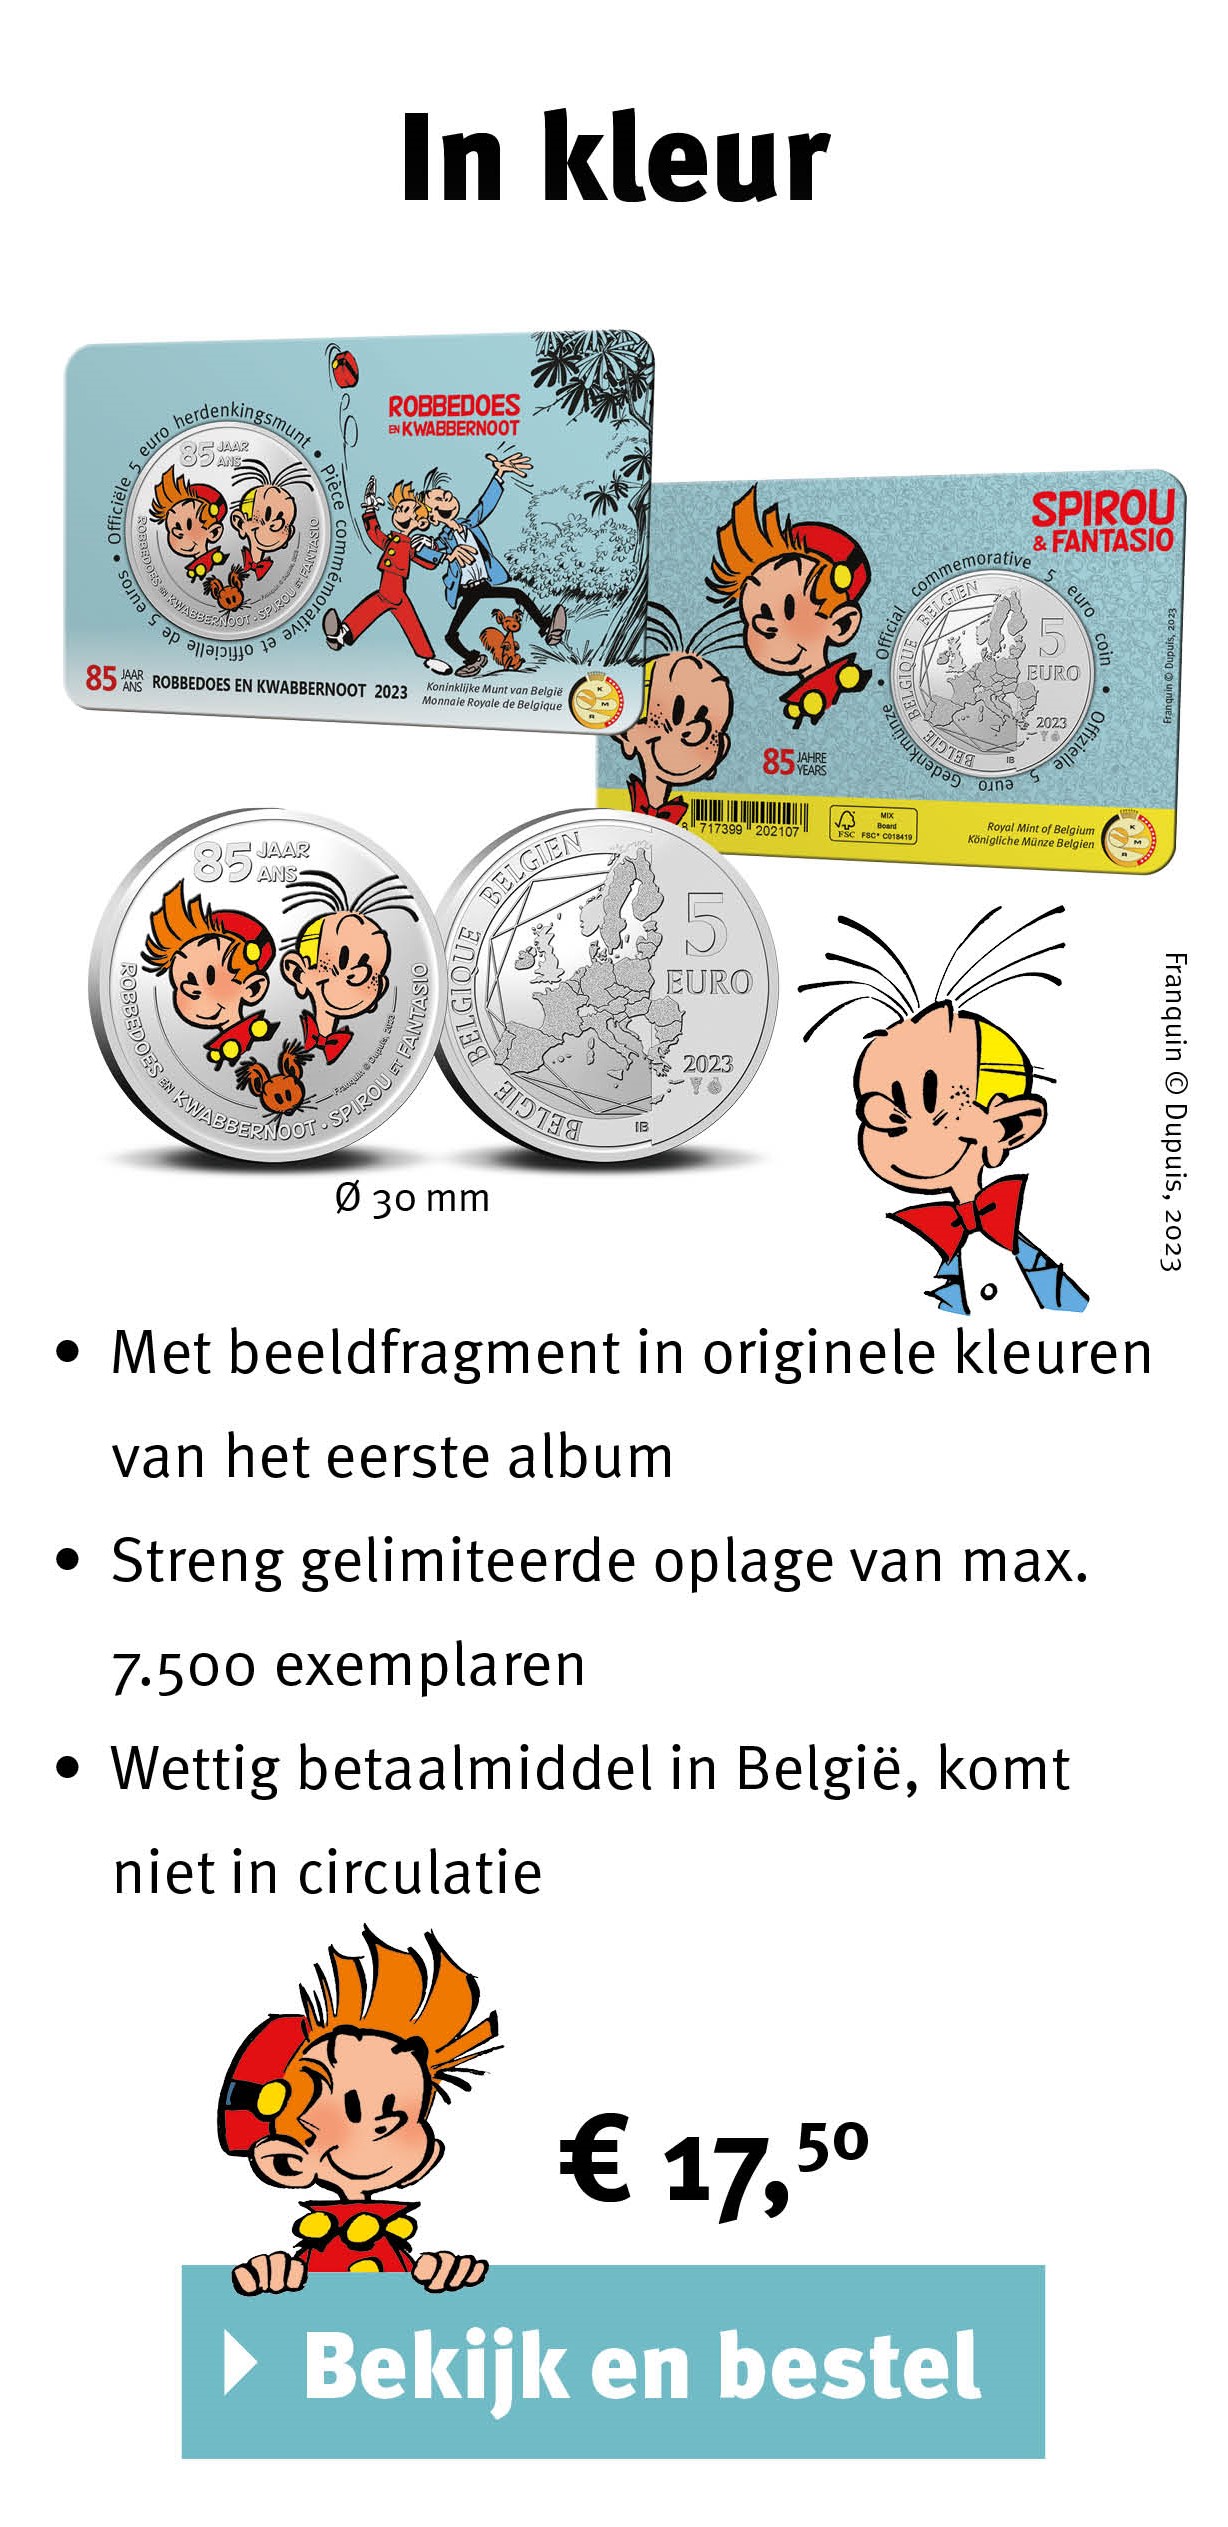 Bekijk en bestel: België 5 euromunt 2023 ‘85 jaar Robbedoes & Kwabbernoot’ kleur BU in coincard